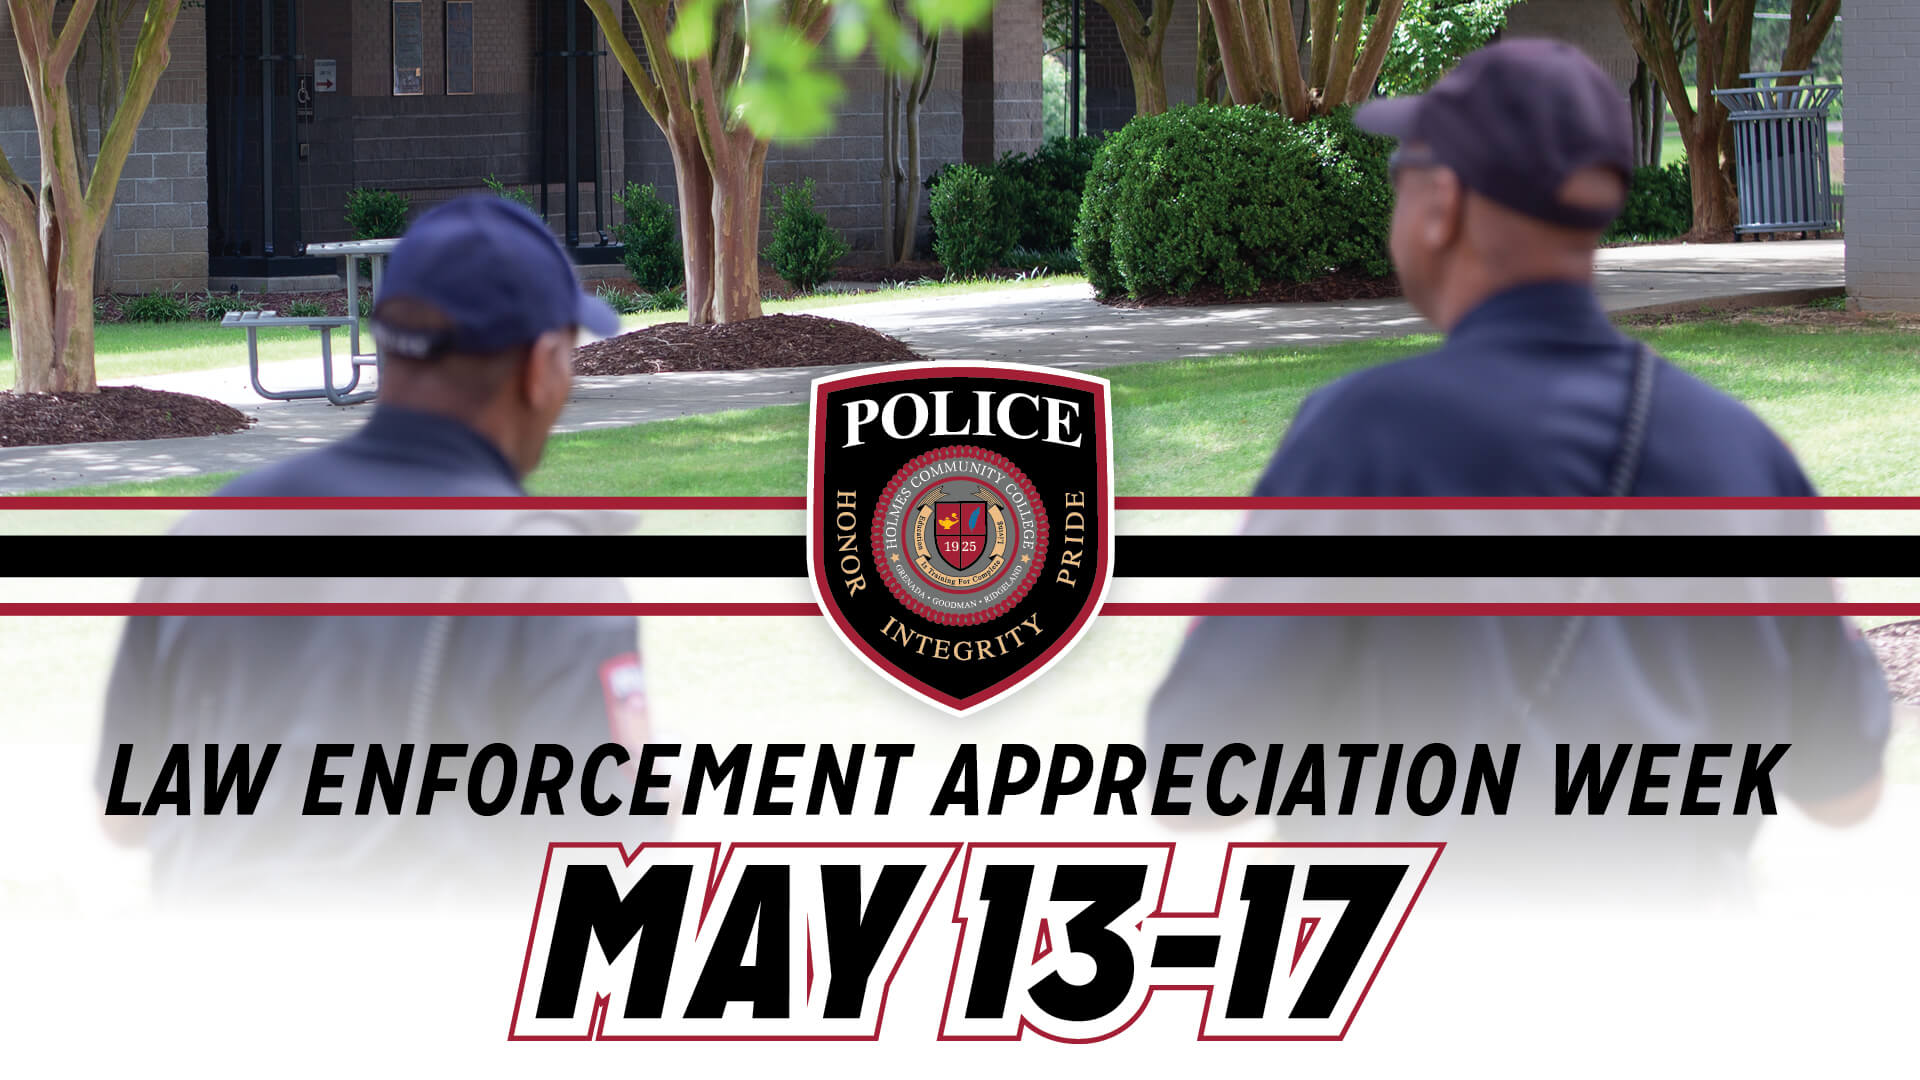 Law Enforcement Appreciation Week is May 13-17